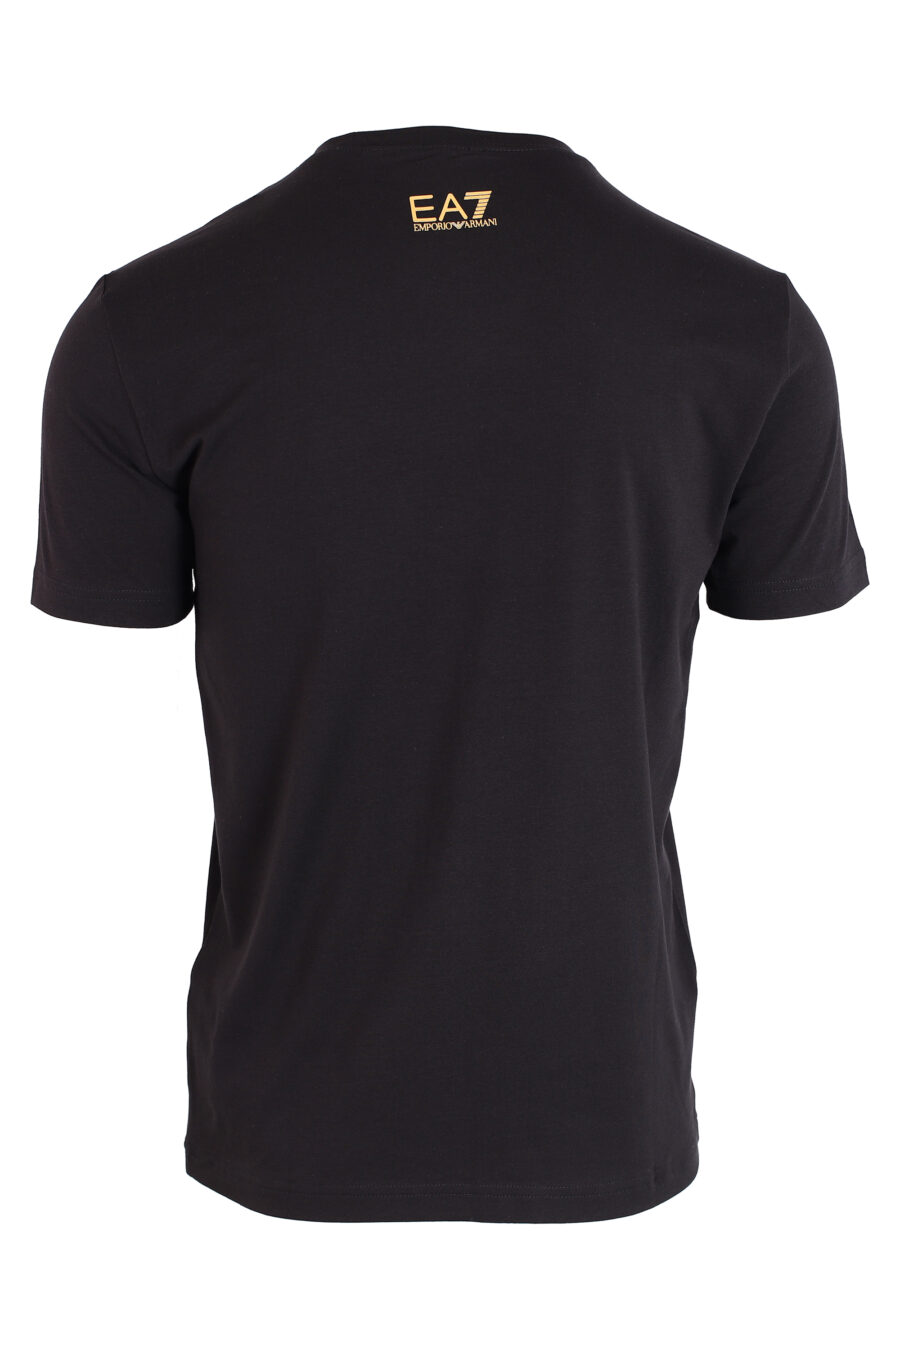 Camiseta negra con maxilogo mix dorado y negro - IMG 3242